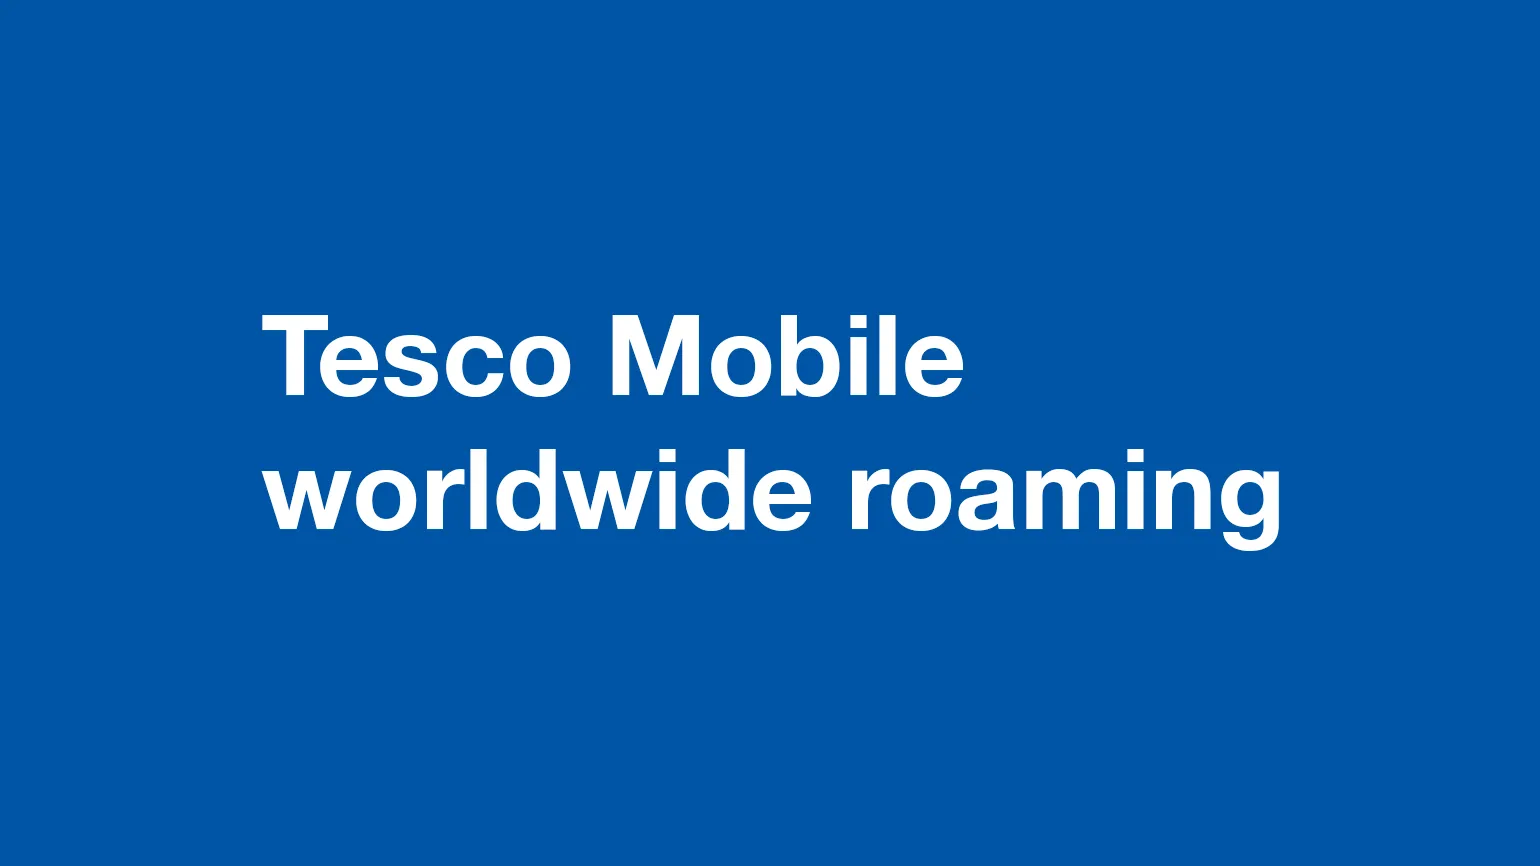 Can I roam outside the EU with Tesco Mobile?